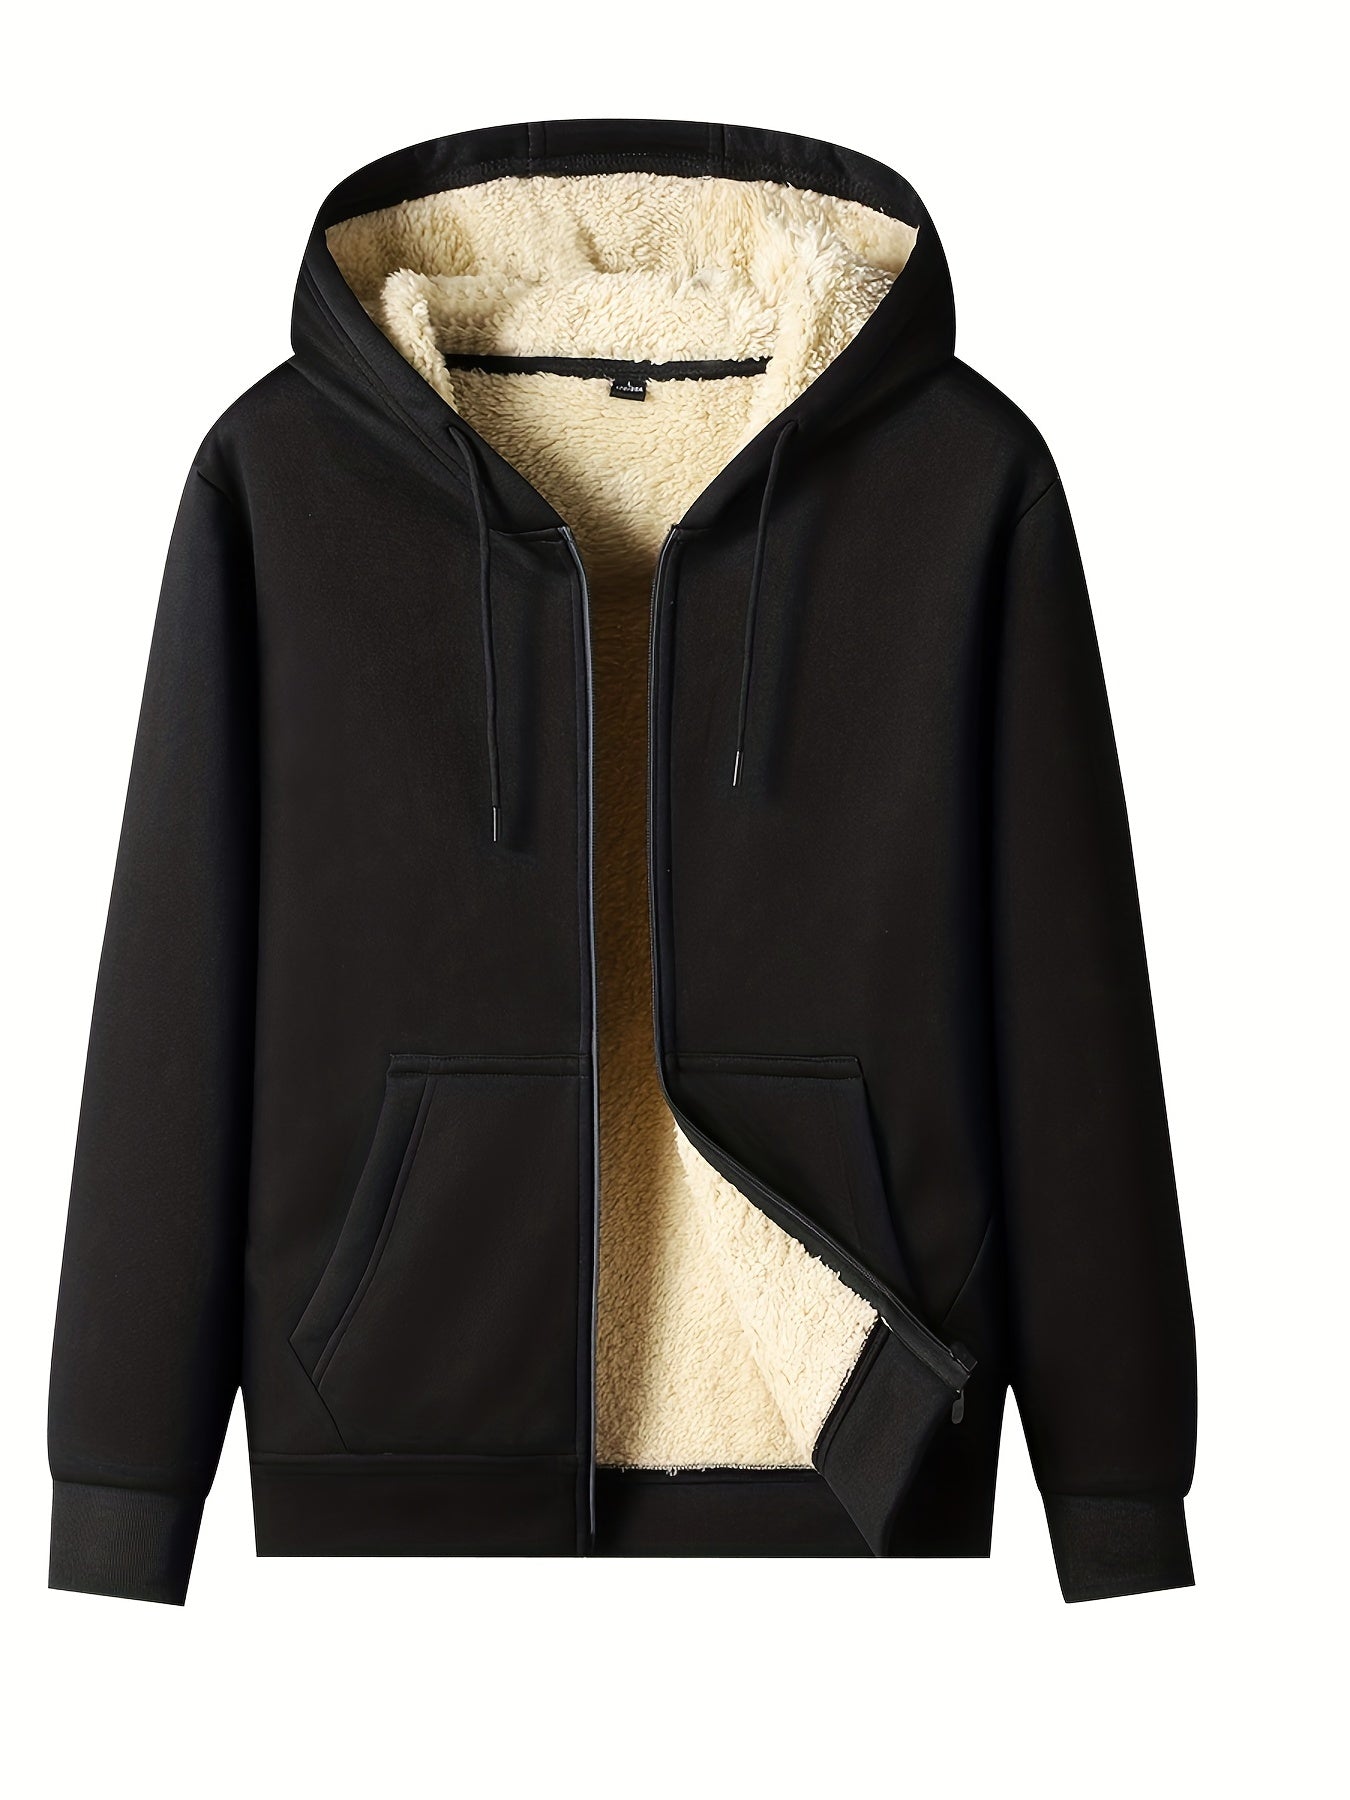 Warm Fleece Solid Hooded Winter Hooded Jacket, Men's Casual Stretch Zip Up Jacket Coat For Fall Winter